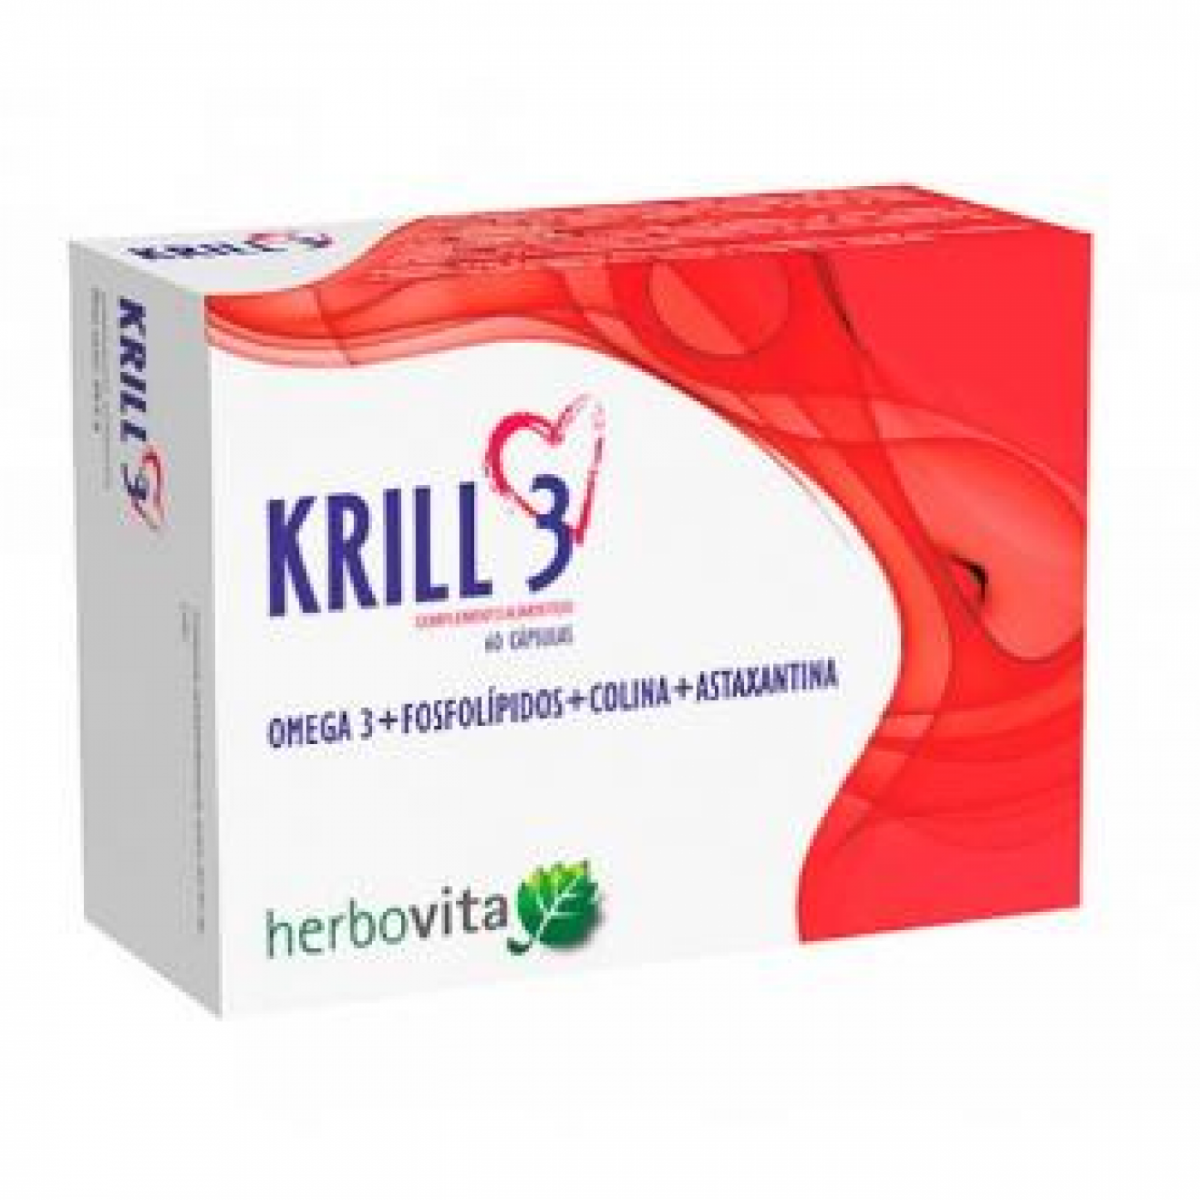 Krill 3 725 mg 60 cápsulas Omega 3